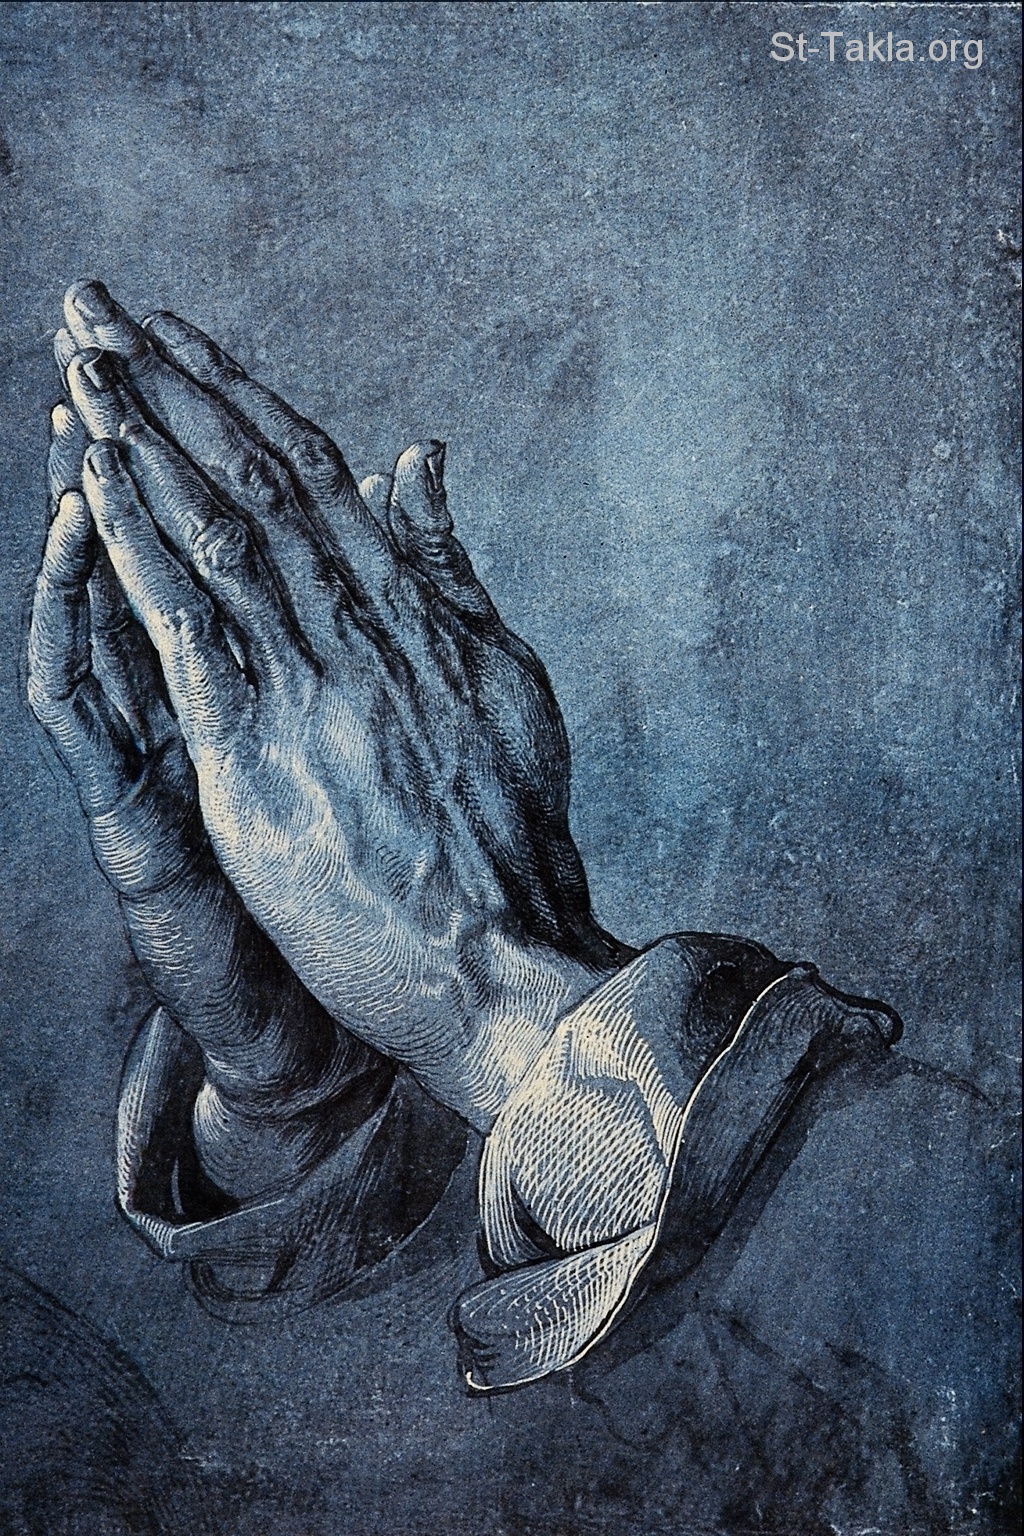 St-Takla.org         Image: The Praying Hands, painting by Albret Durar صورة: اليدين المصليتين - الفنان ألبرت دورار